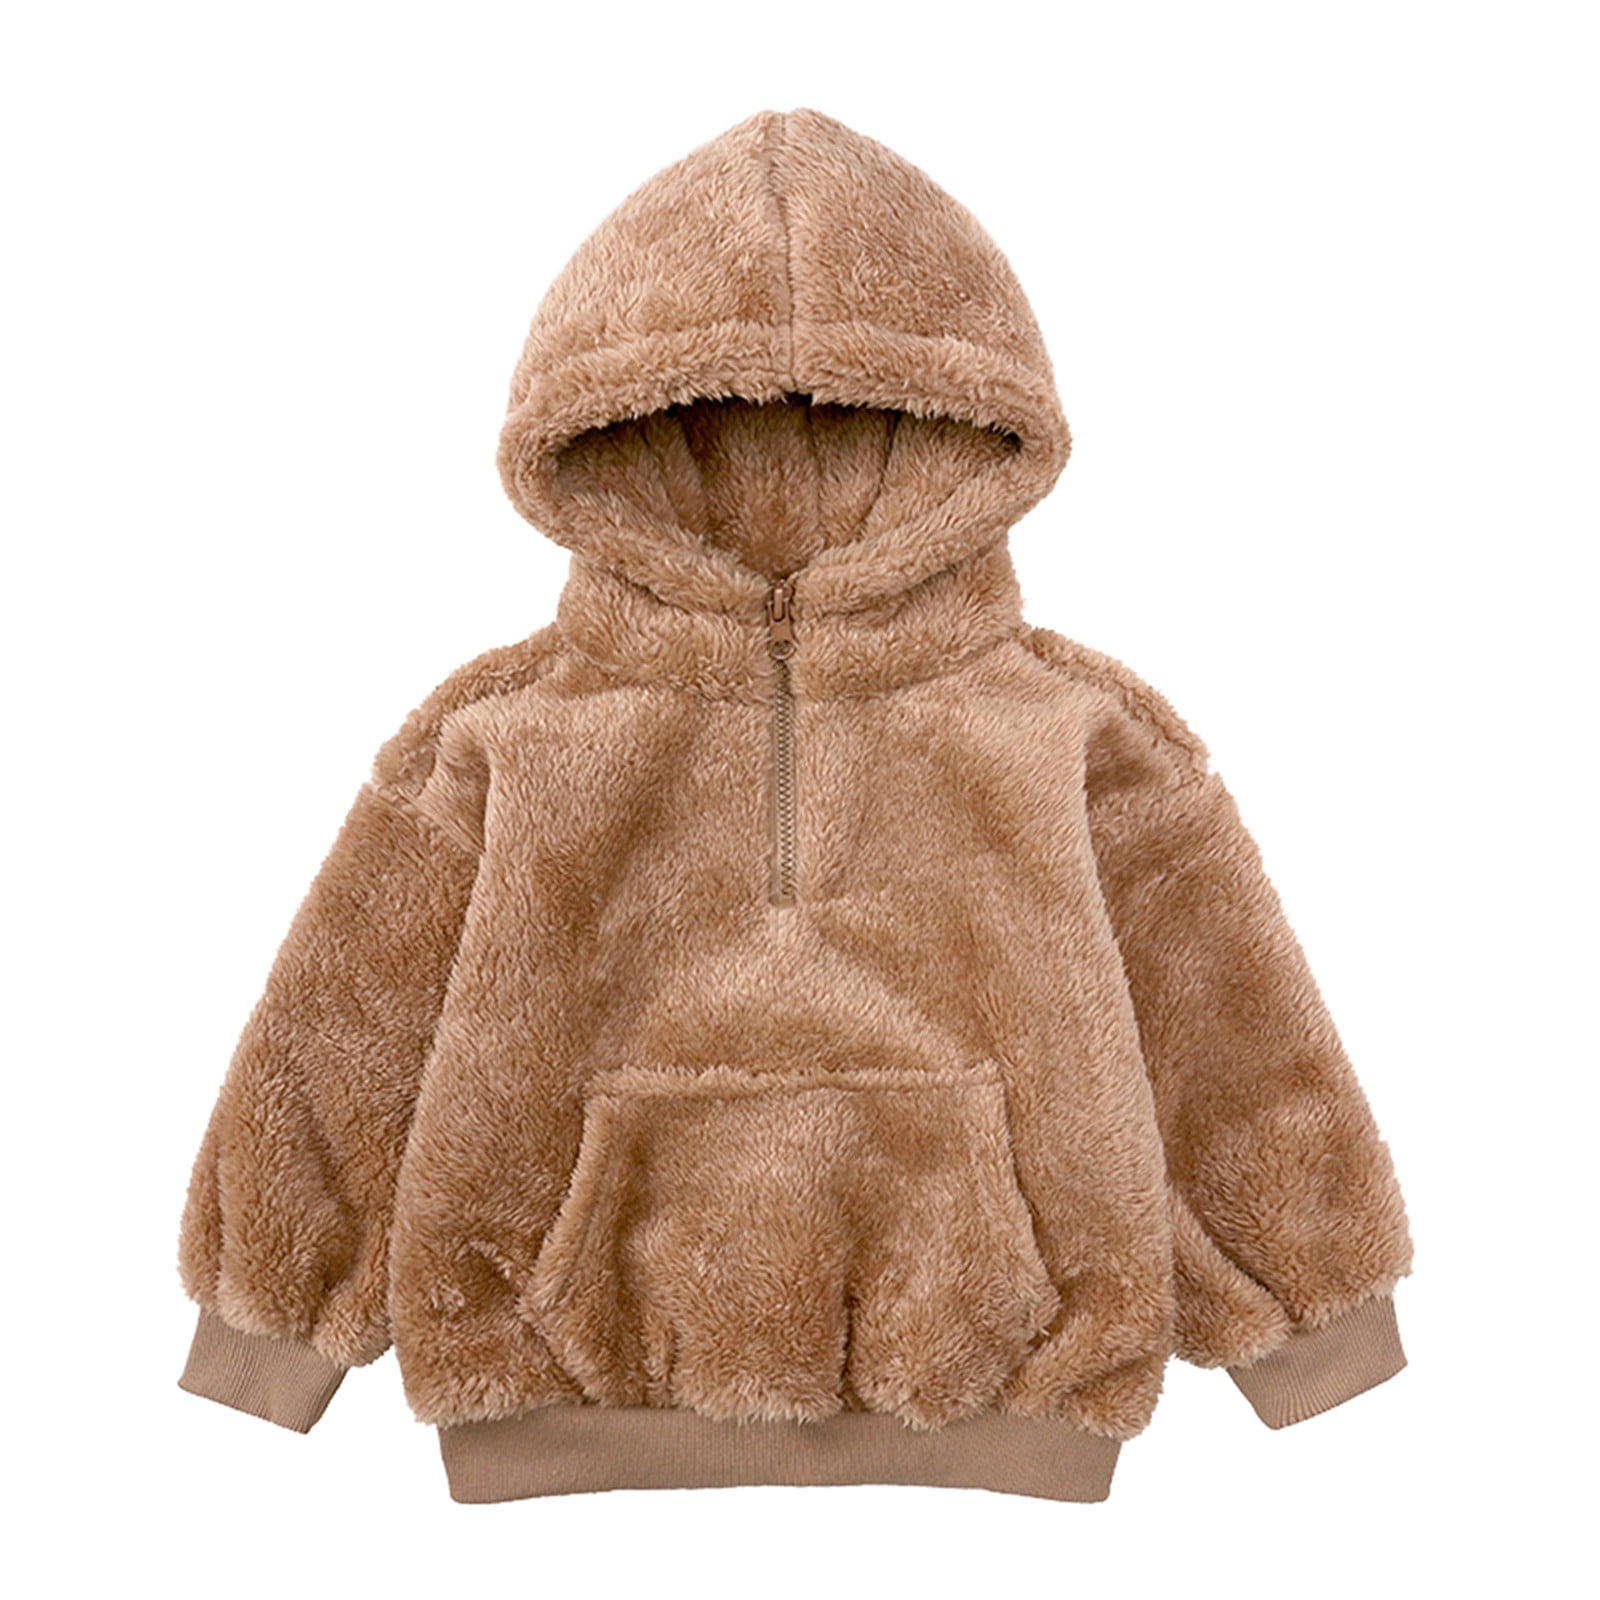 Kids Teddy Bear Jacket Fleece Hooded Jacket Coat for Toddler 